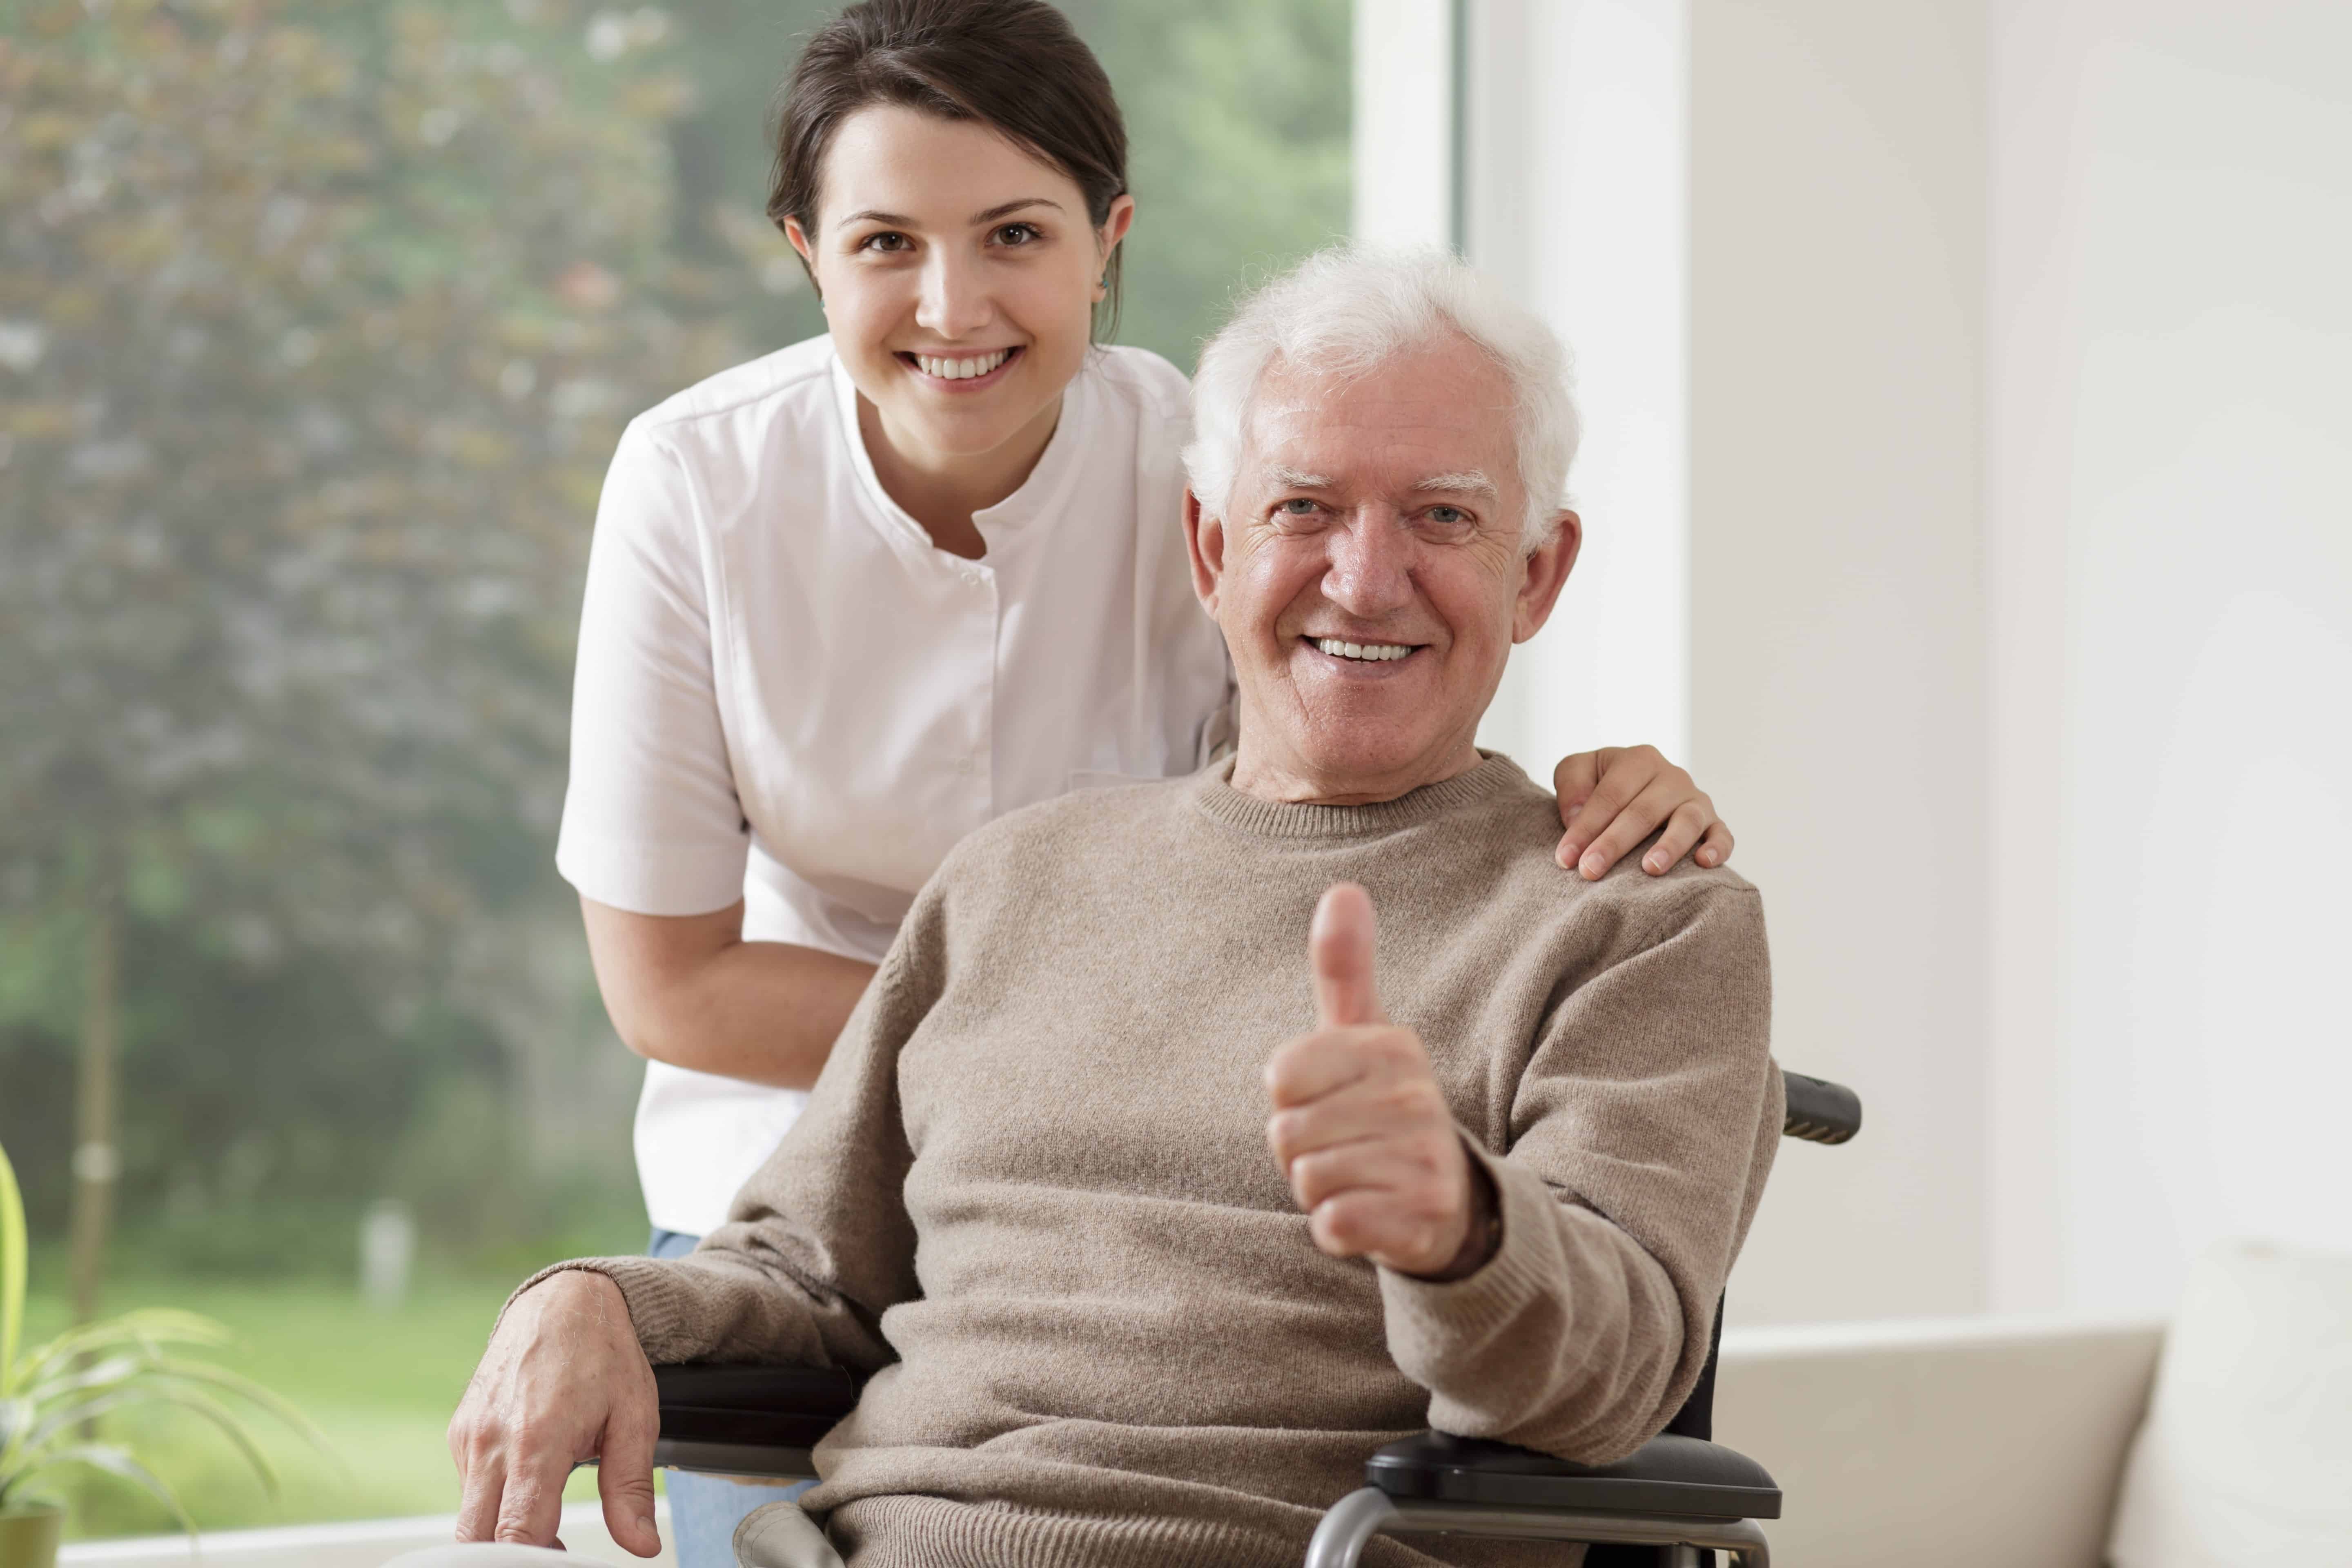 Smiling senior man giving thumbs up to camera, smiling nurse behind him